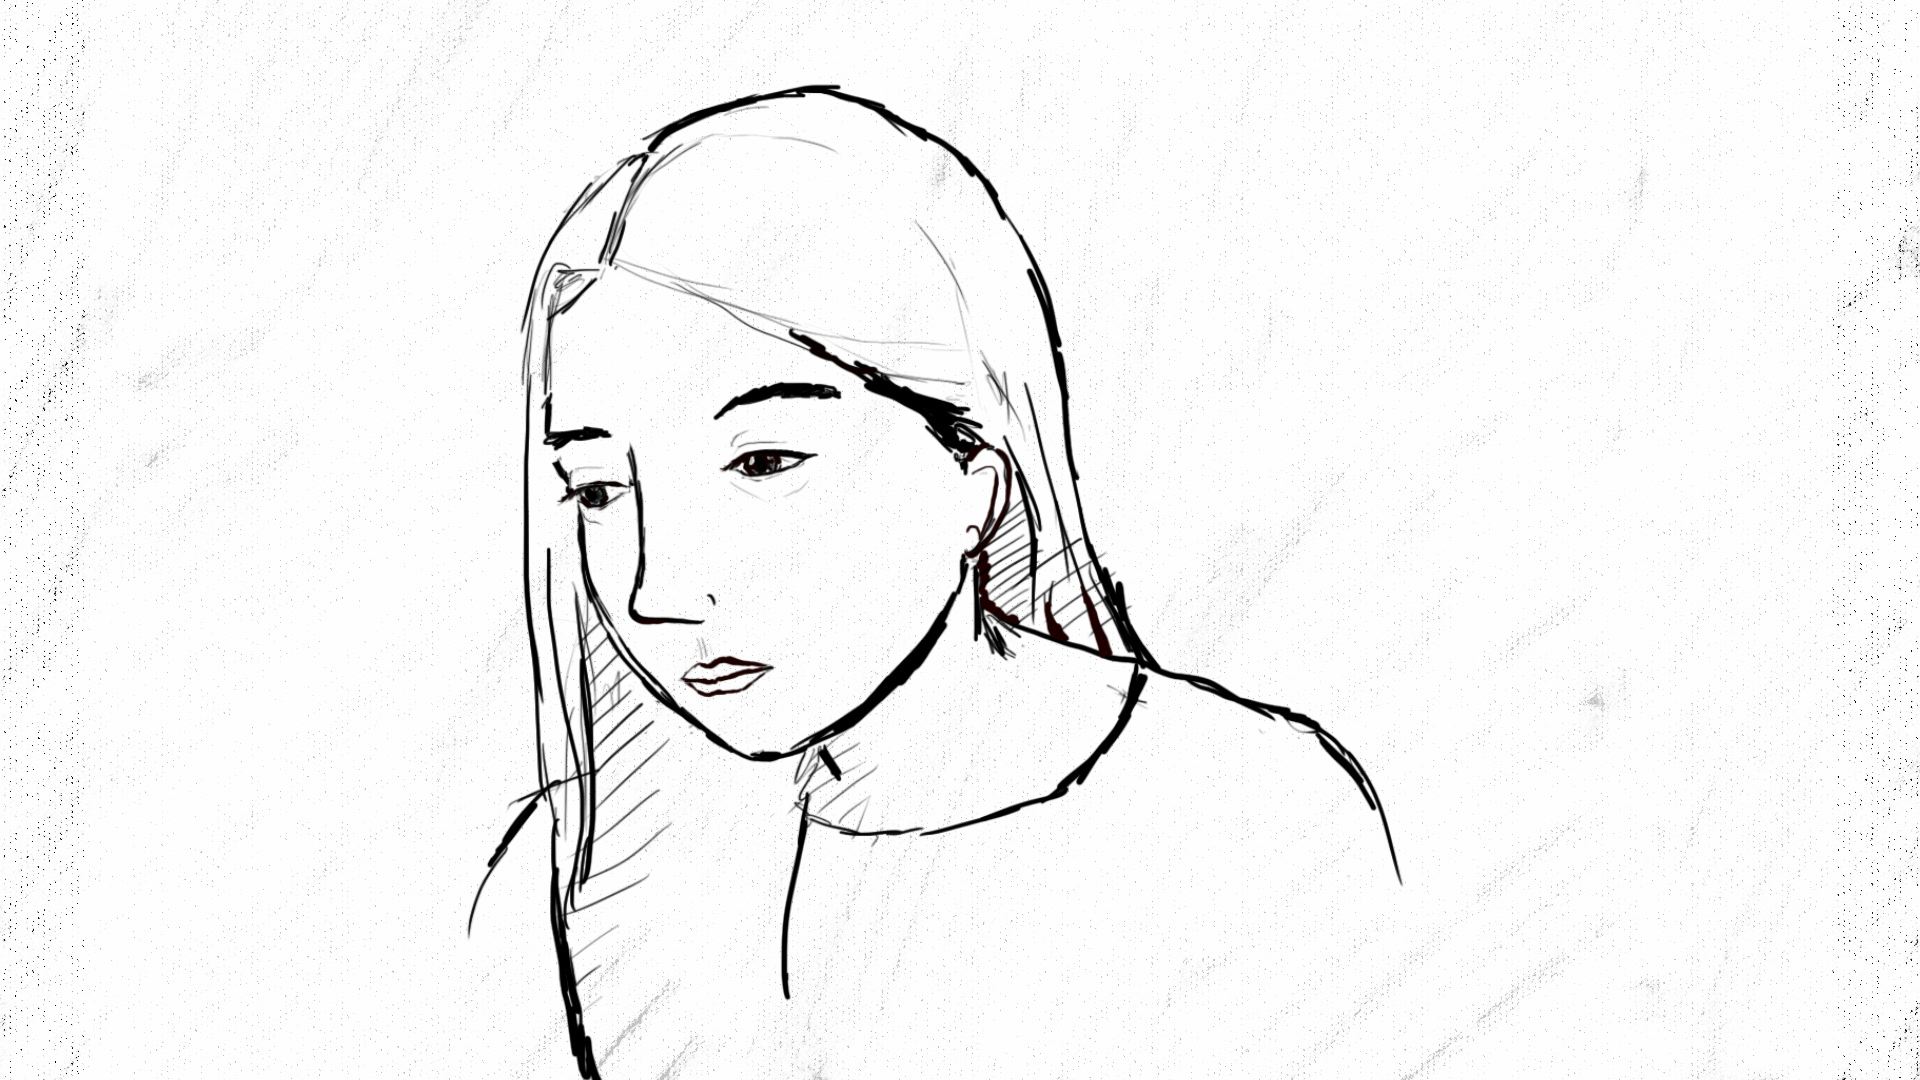 A hand drawn version of a sad girl